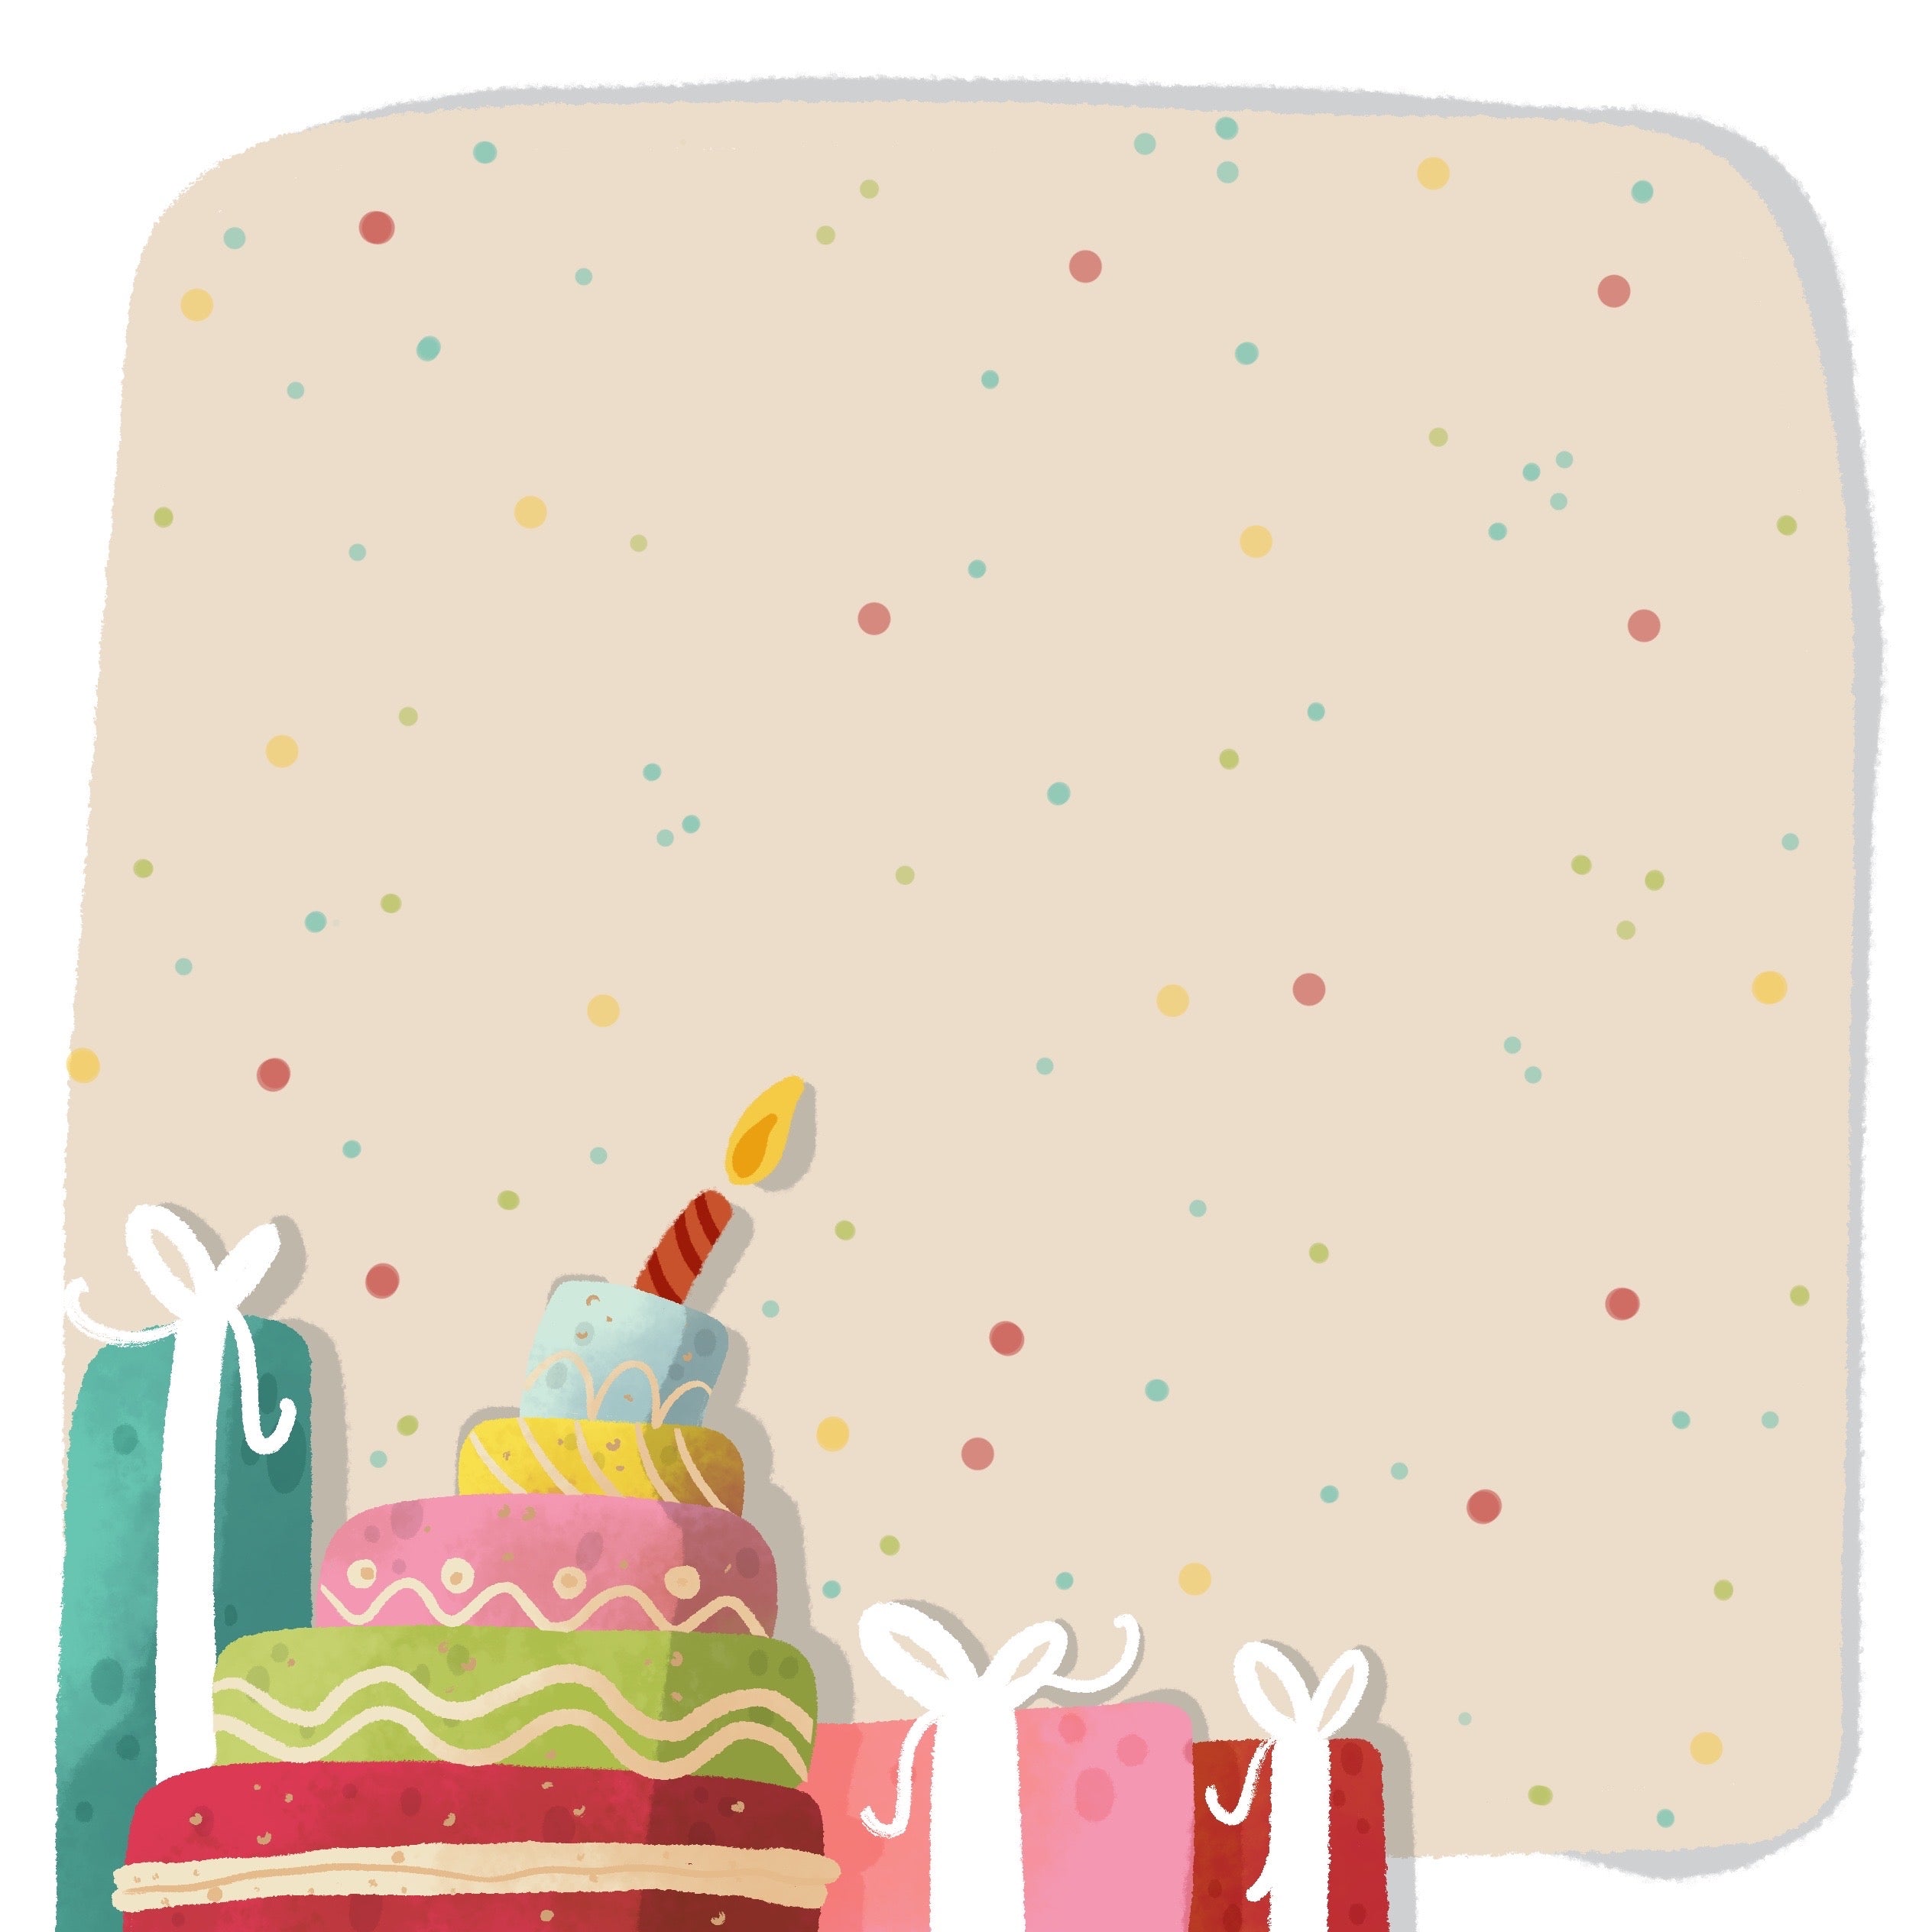 Top Blank Birthday Cake Stock Photo 1065100592 | Shutterstock